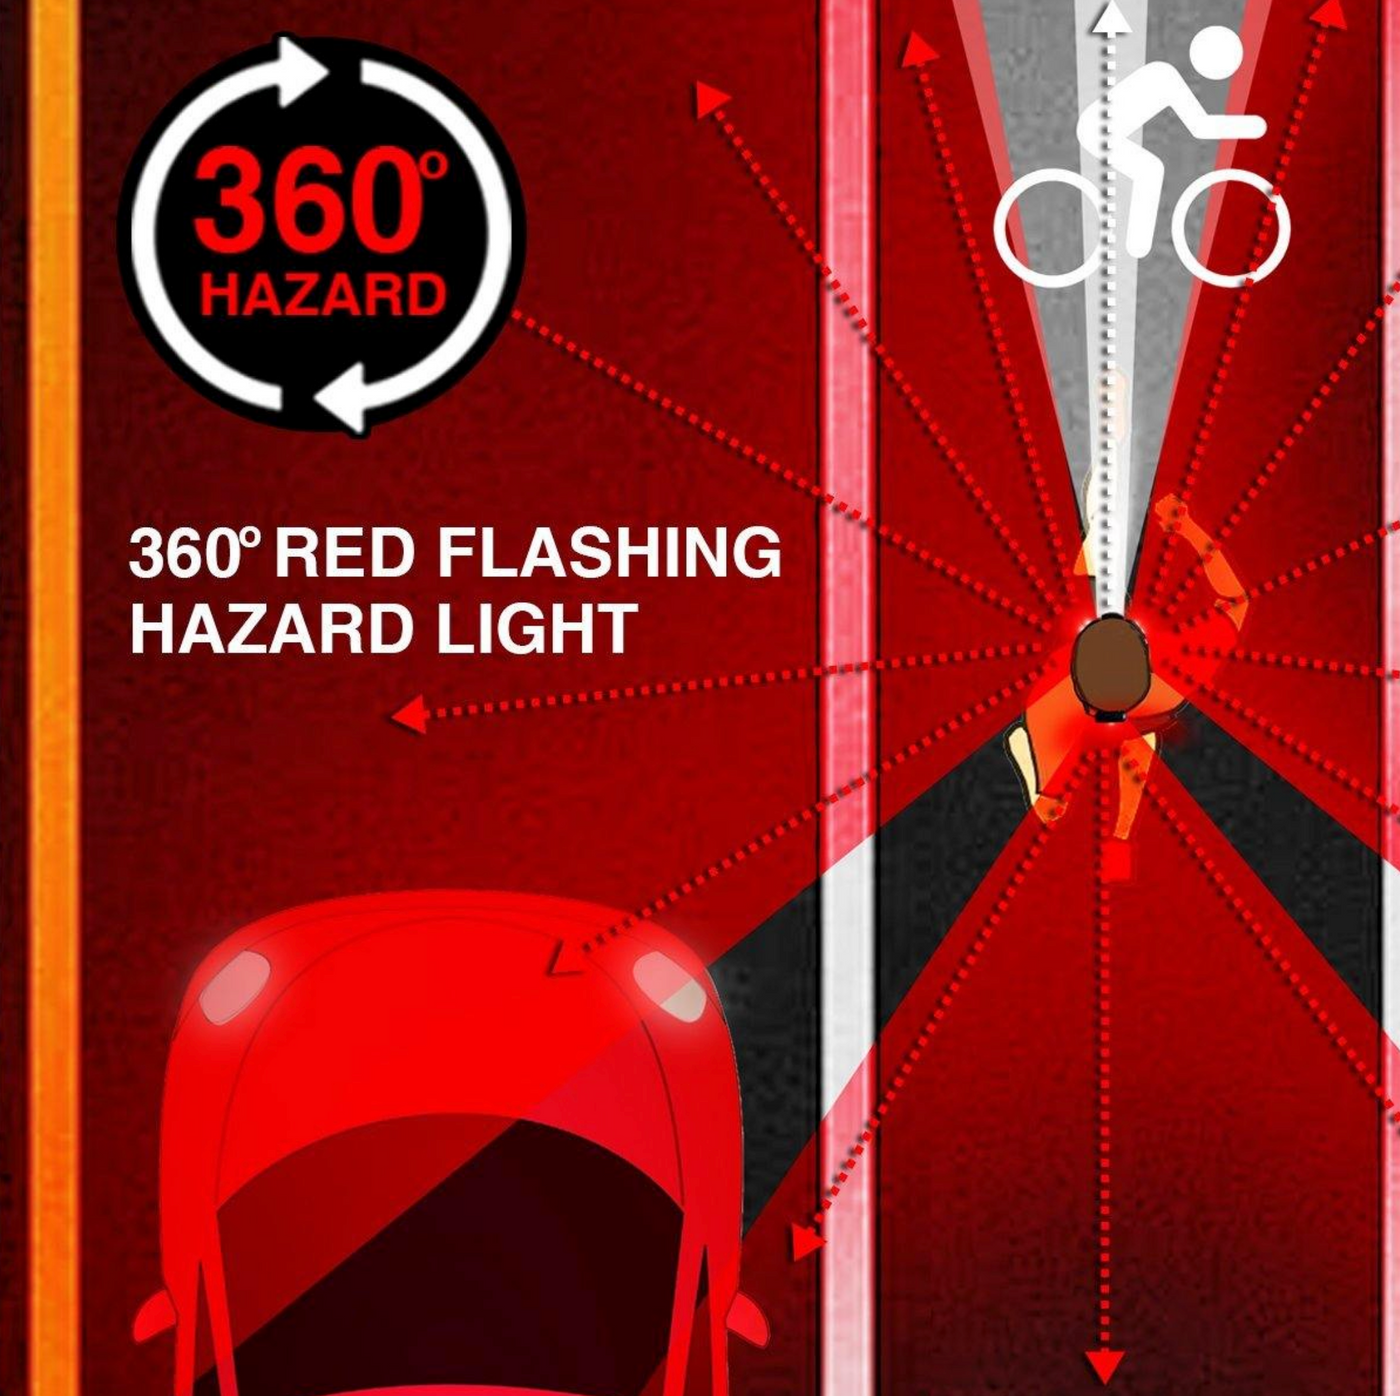 FLEXIT Headlamp PRO 6.5 - 650 lumens with 240° Halo Lighting